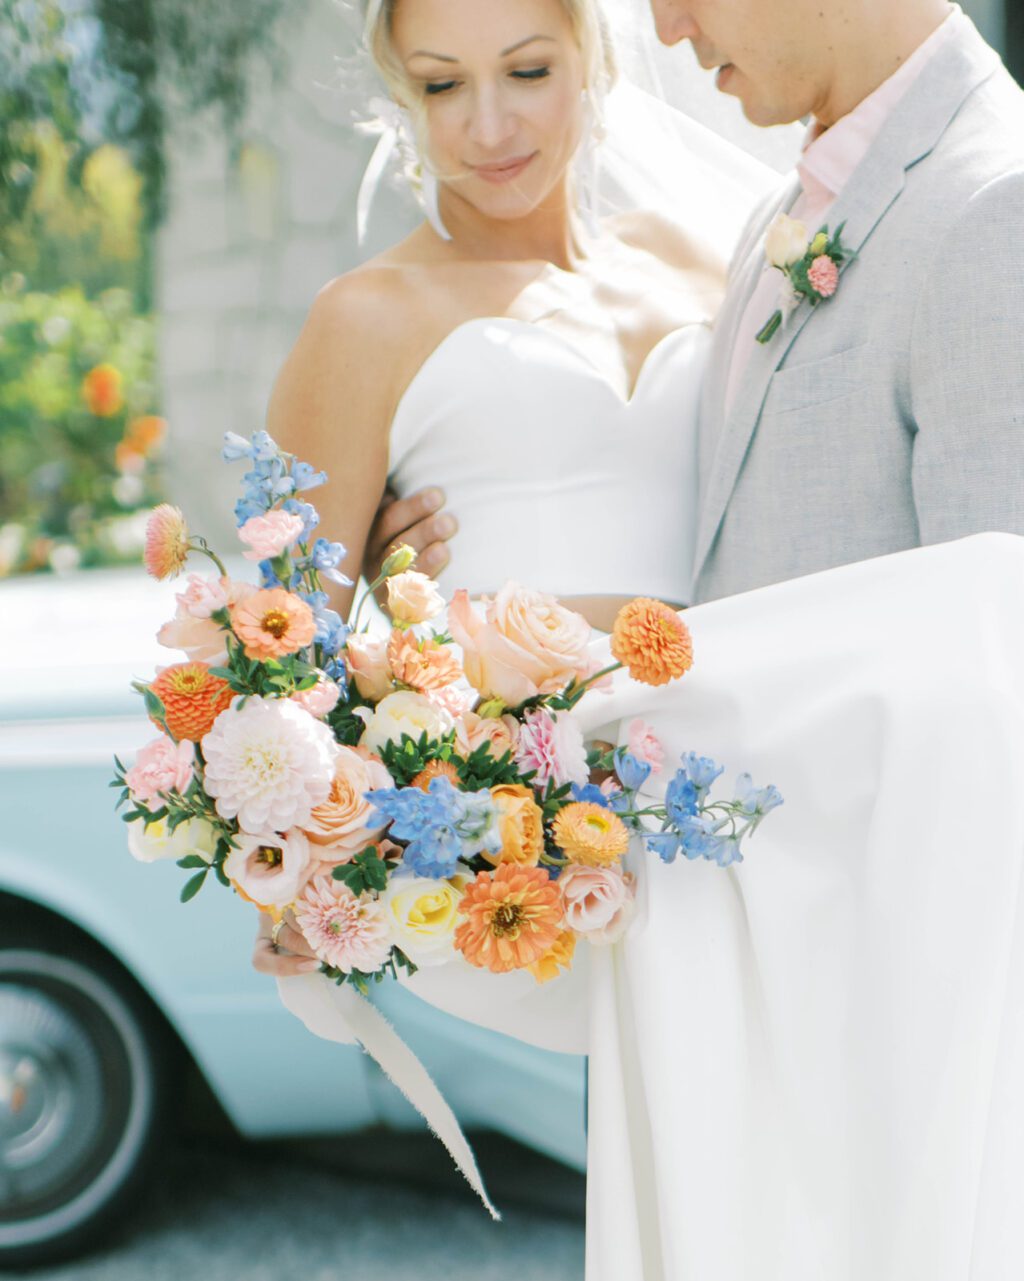 A Vintage Baby Blue Getaway Car & Colourful Summer Wedding Florals ...